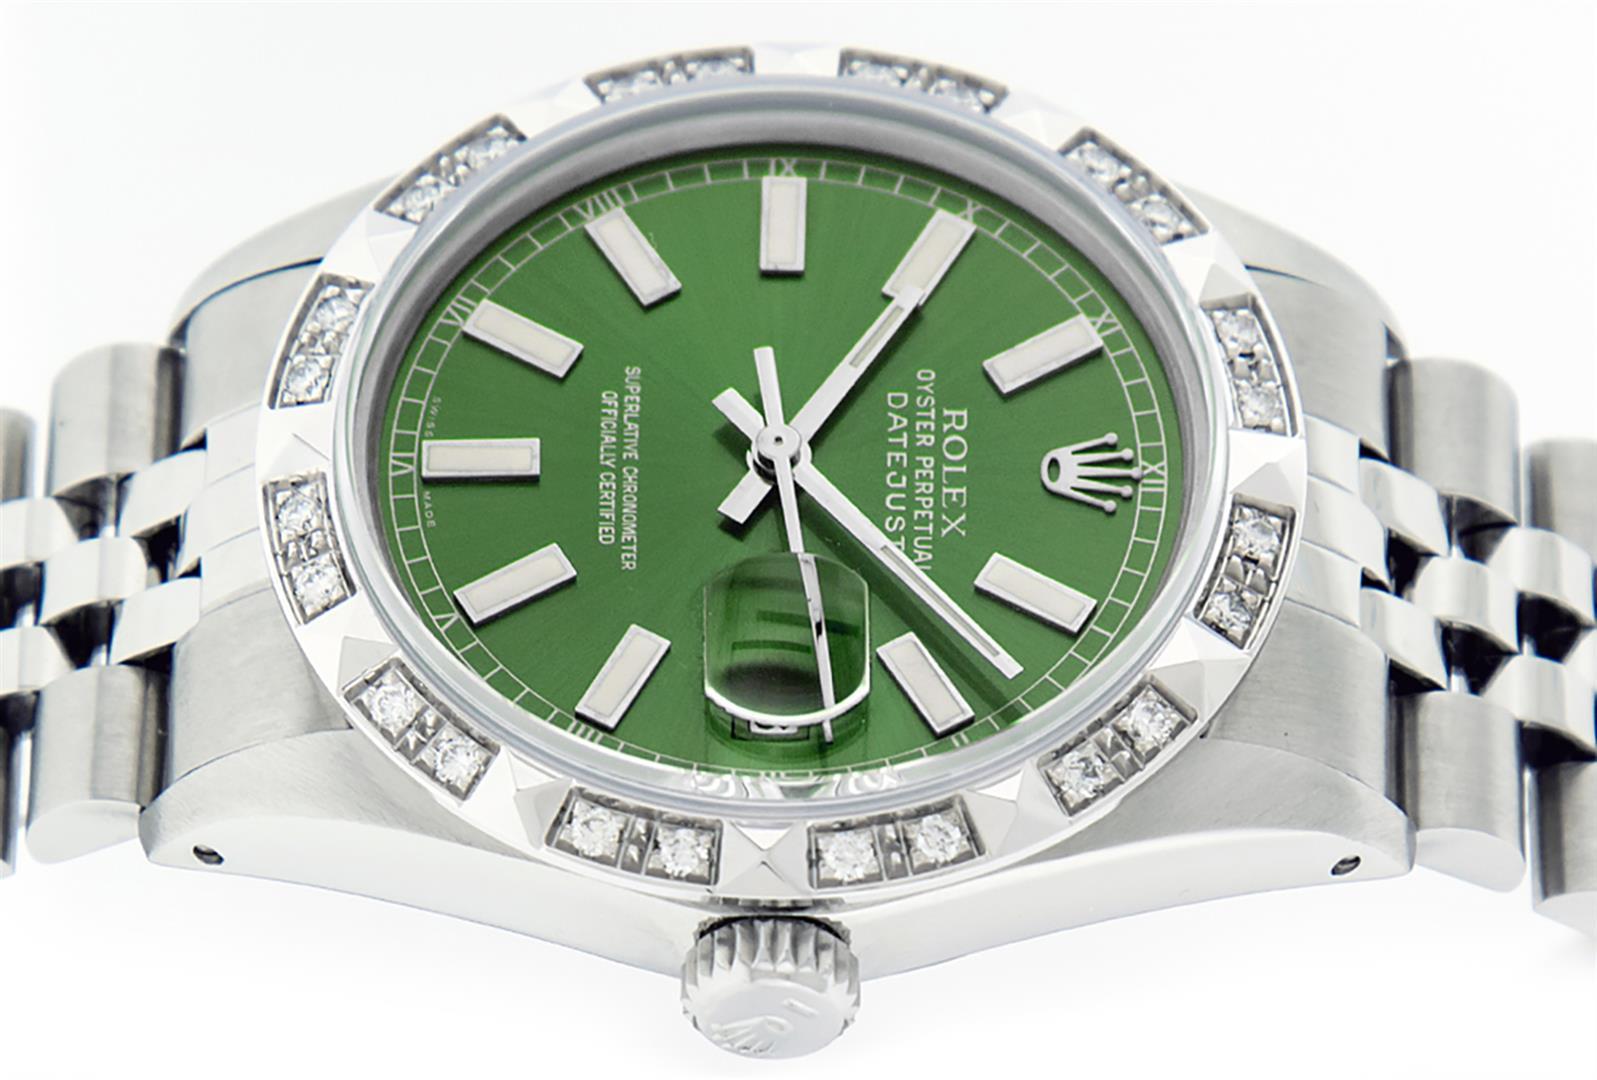 Rolex Mens Stainless Steel 36MM Green Index Pyramid Diamond Datejust Wristwatch